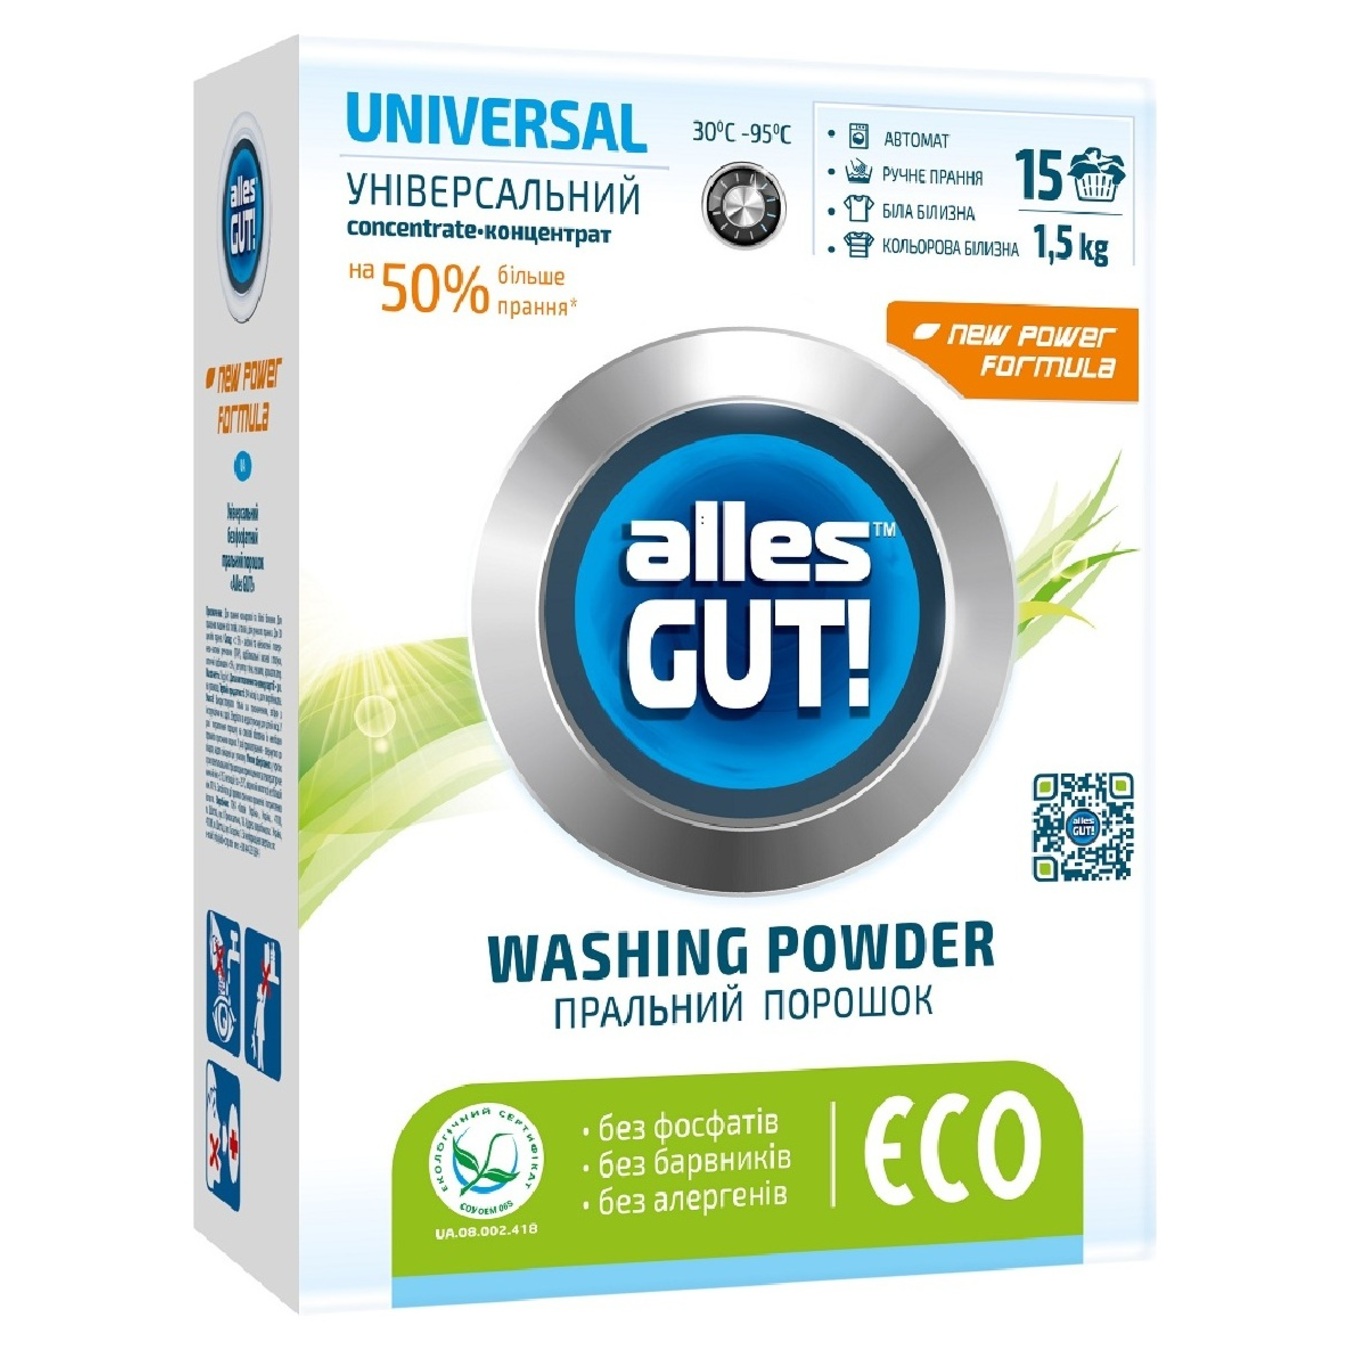 Alles Gut powder! Eco for washing universal 1.5 kg